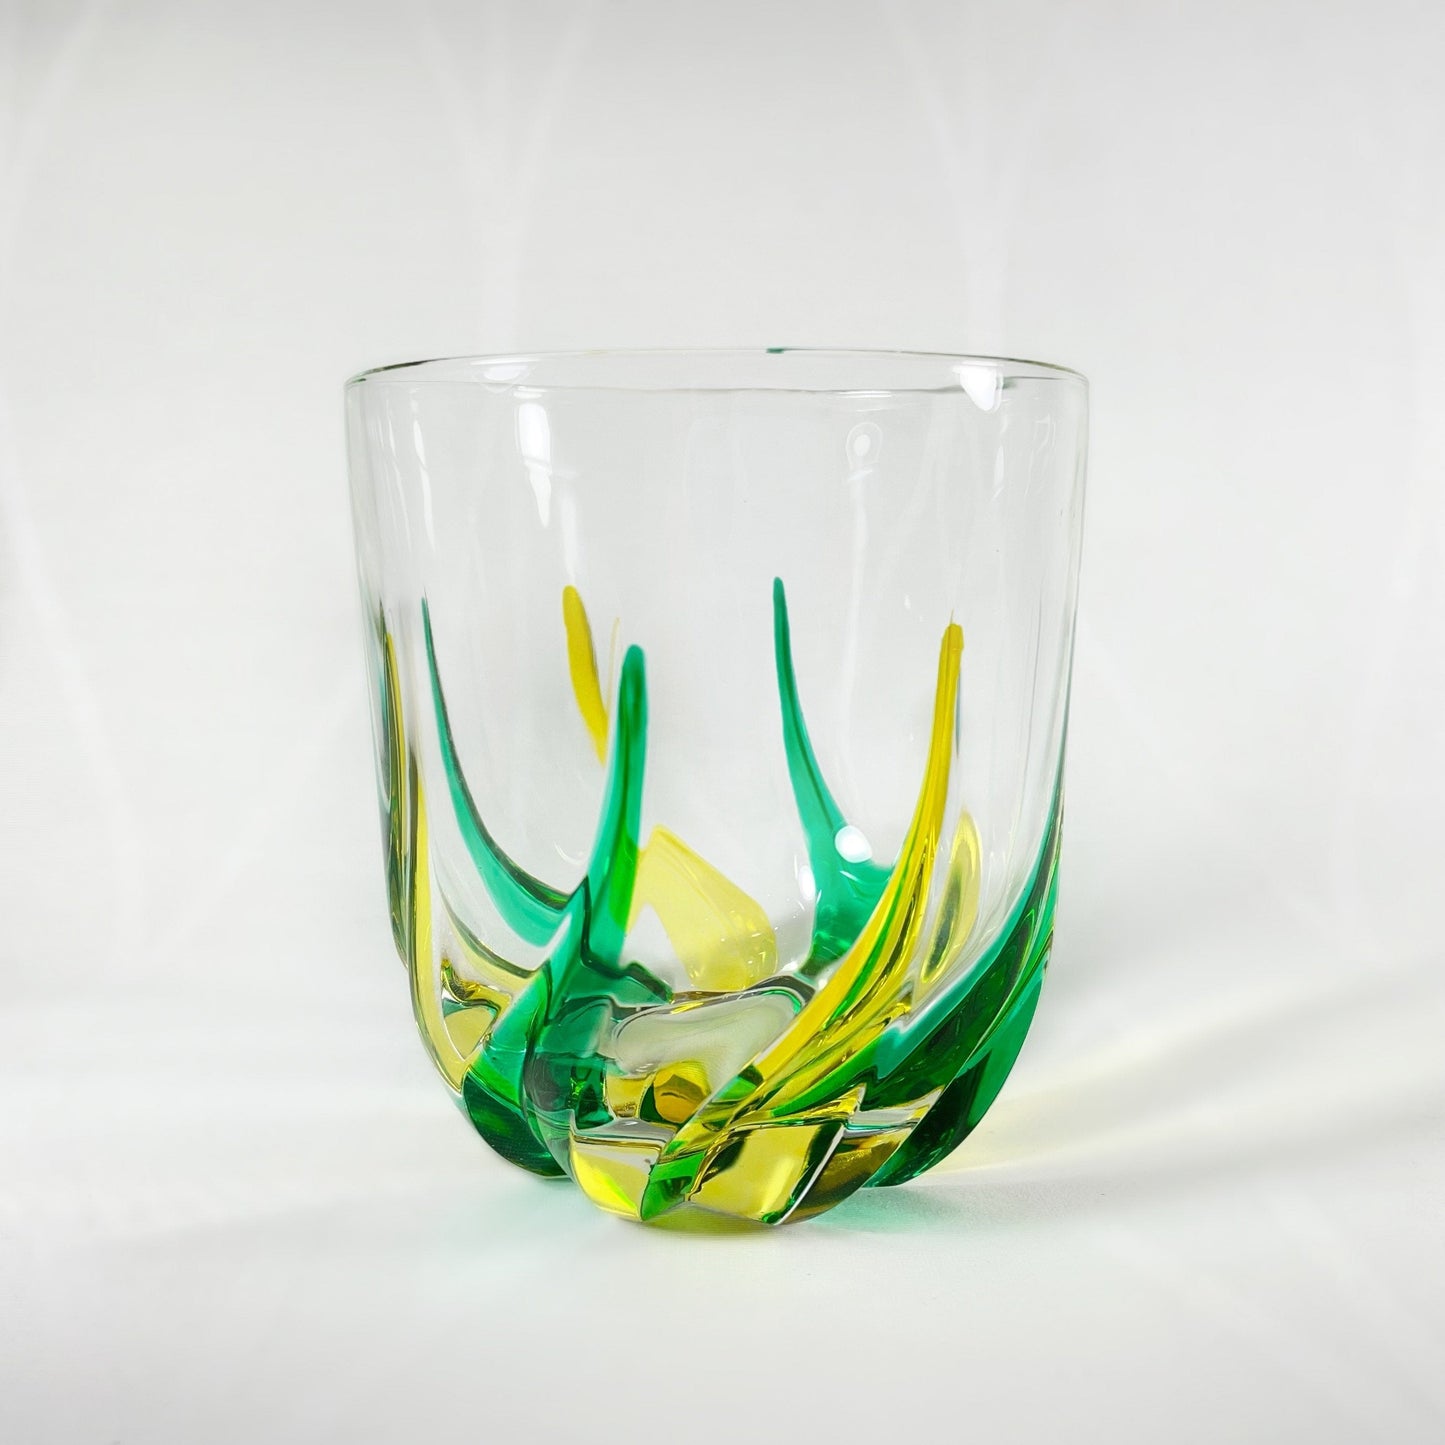 Venetian Glass Stemless Wine Glass - Handmade in Italy, Colorful Murano Glass